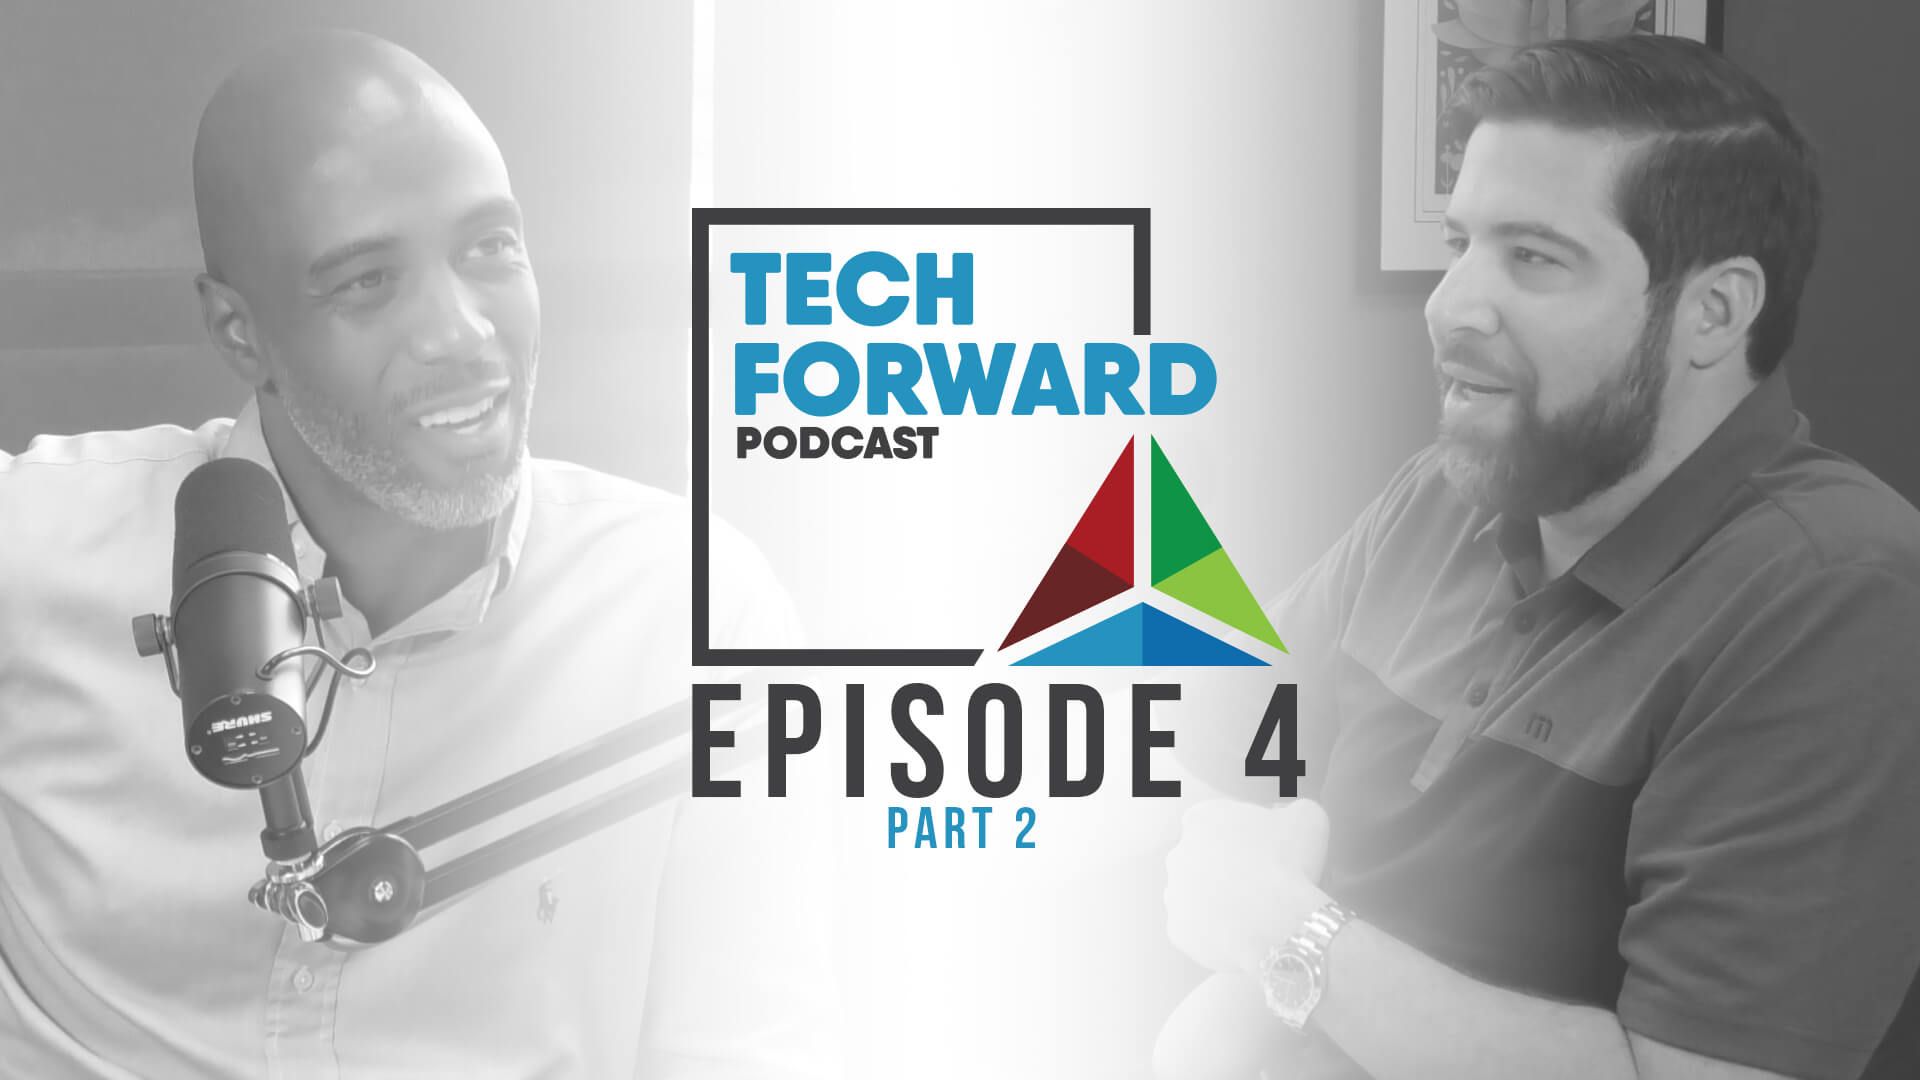 Tech forward podcast episode 4 part 2.